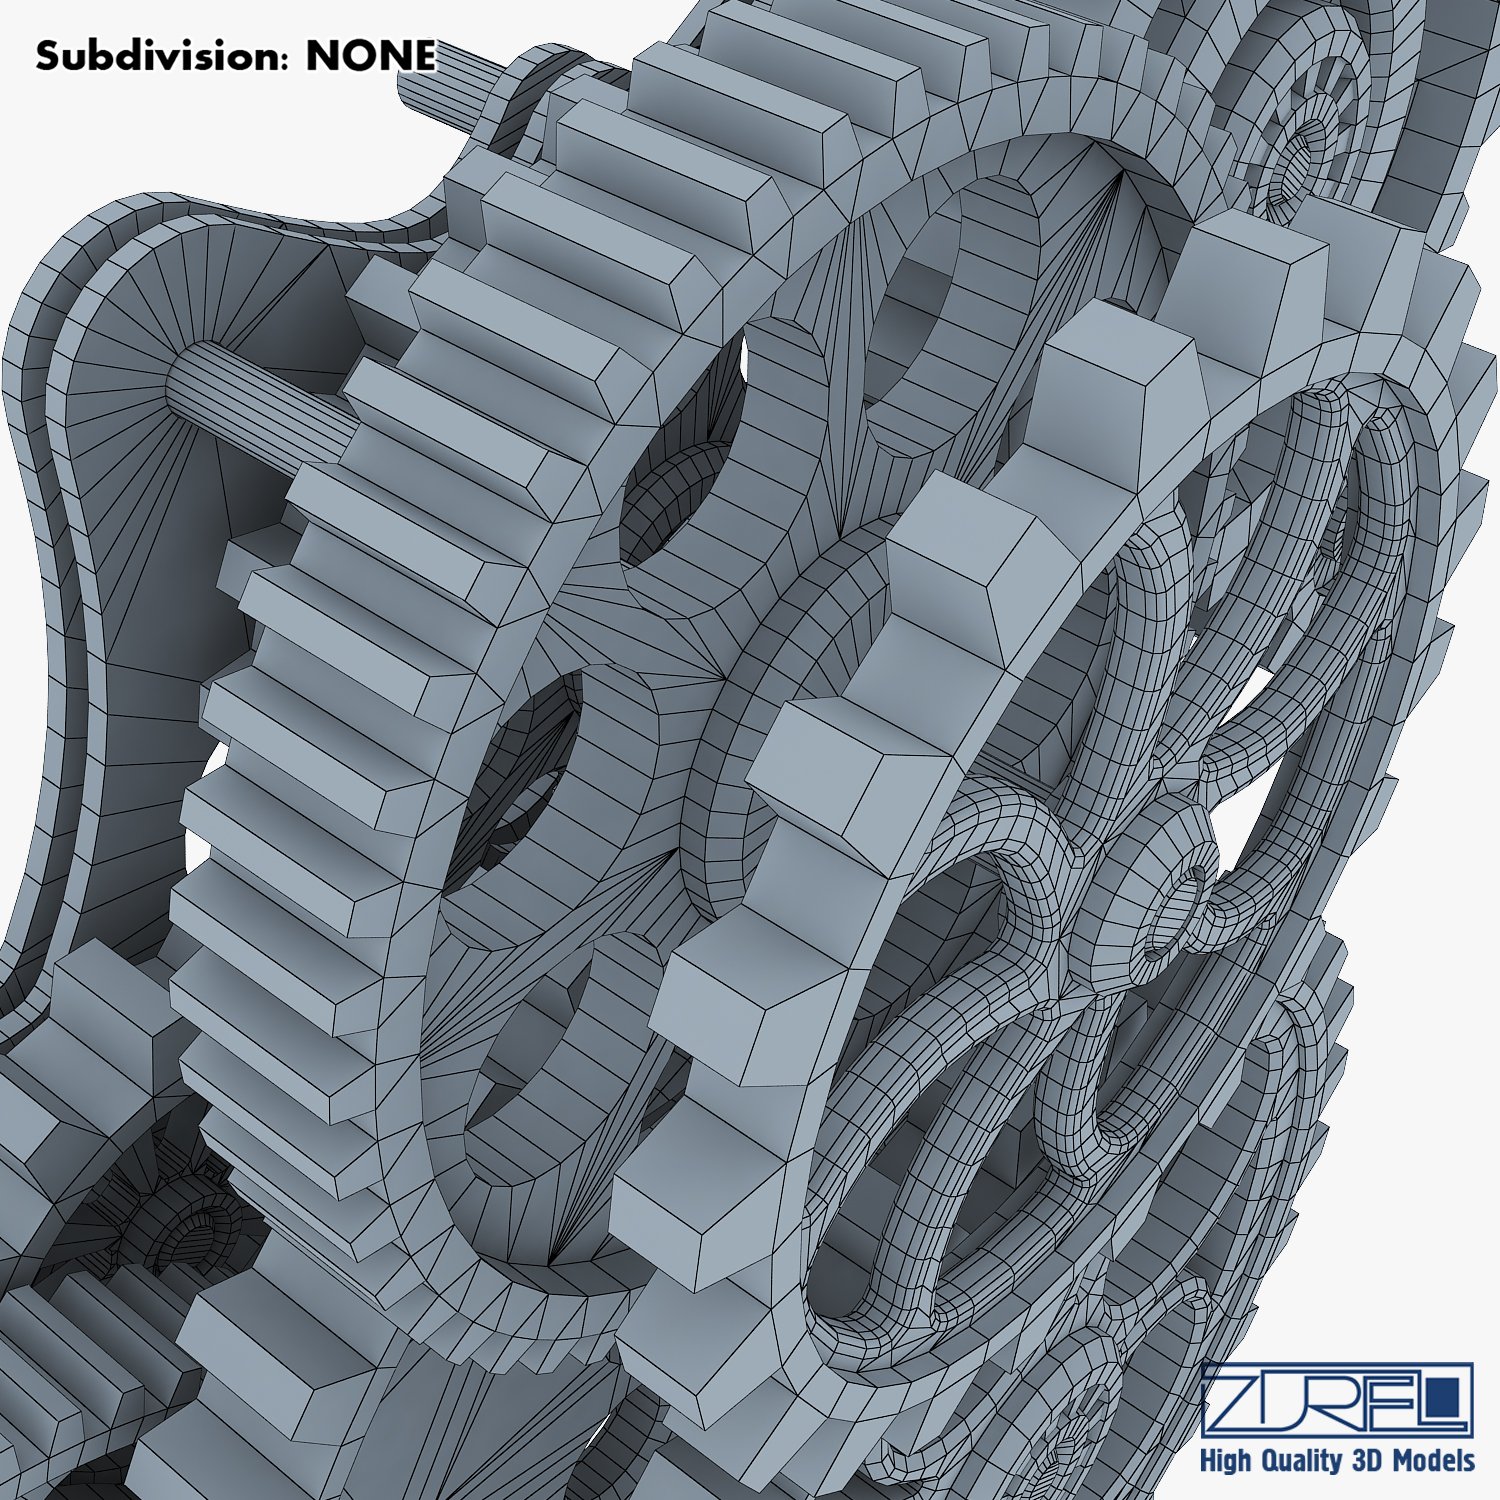 Gear Mechanism V 3 - 3D Model by Zurel